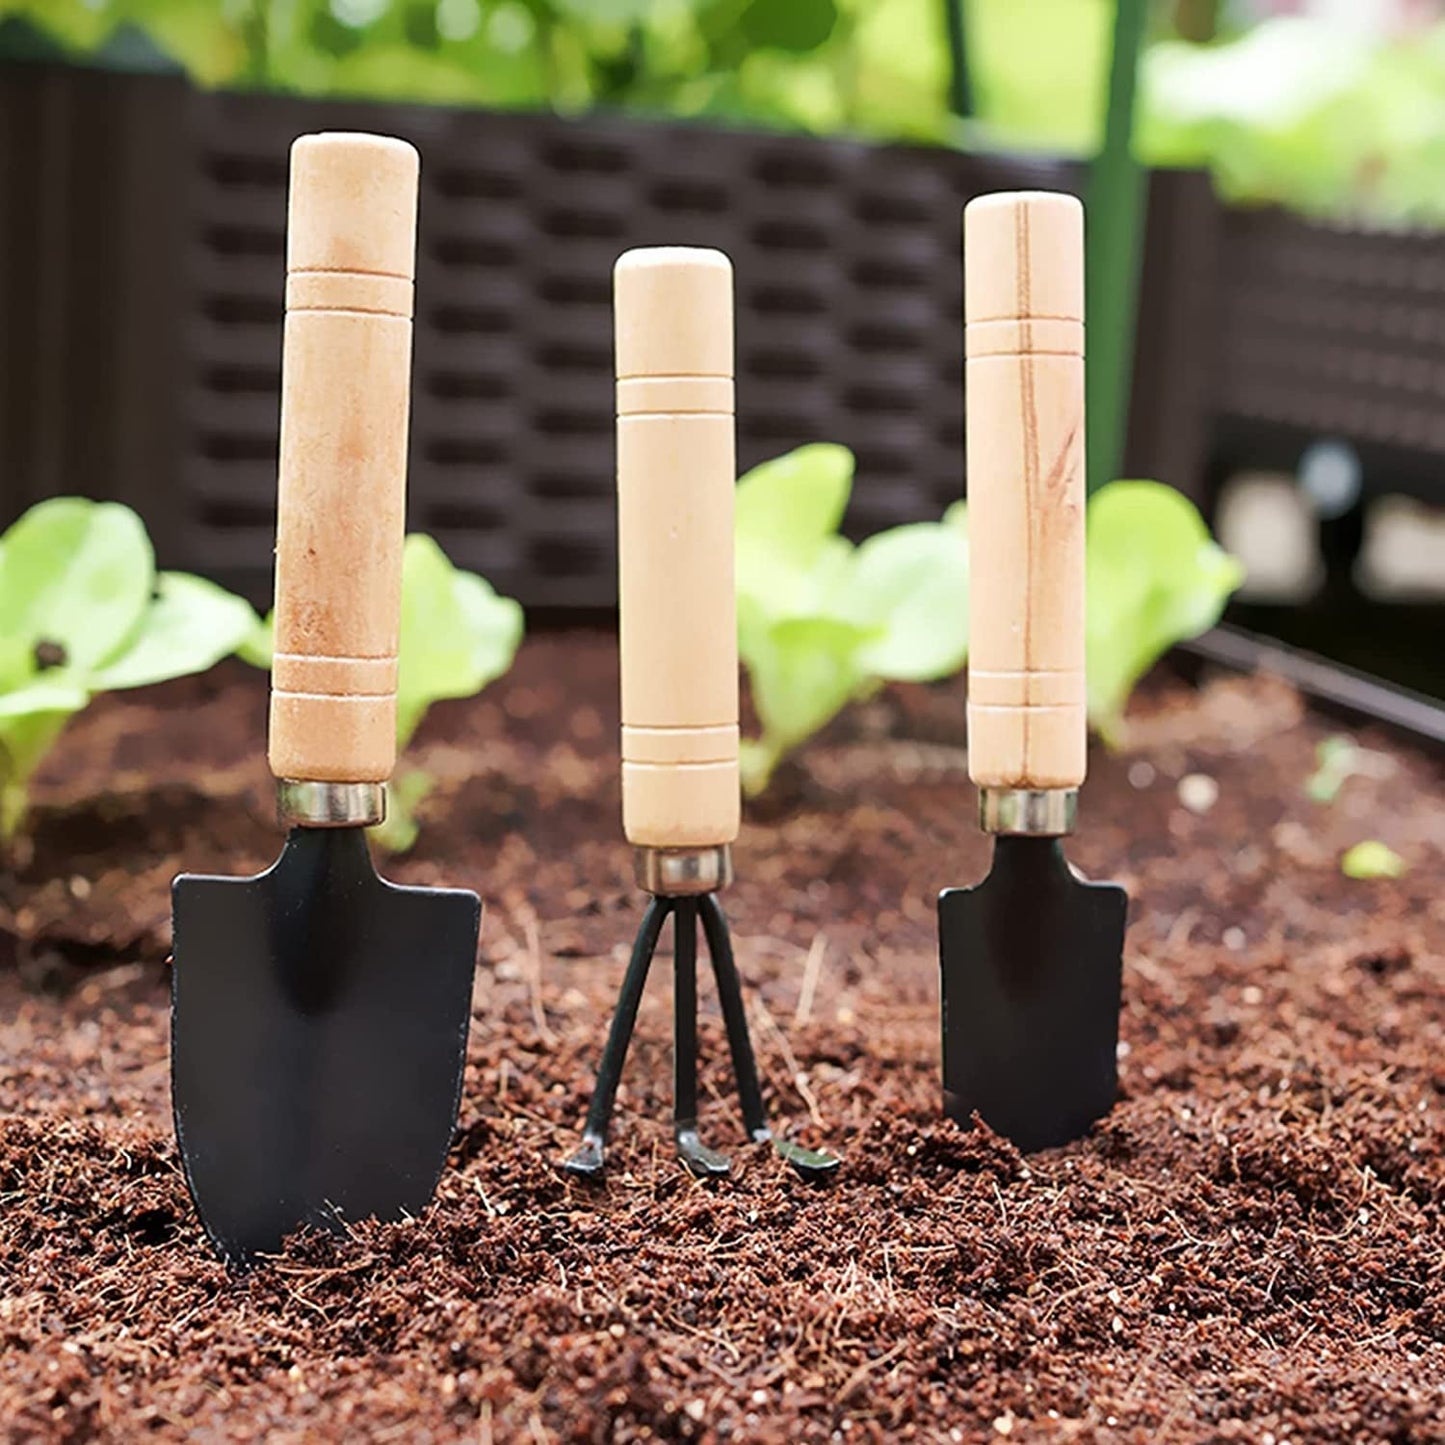 Casa De Amor Mini Gardening Tools Kit - Cultivator, Trans-Planter and Trowel (3 Piece)